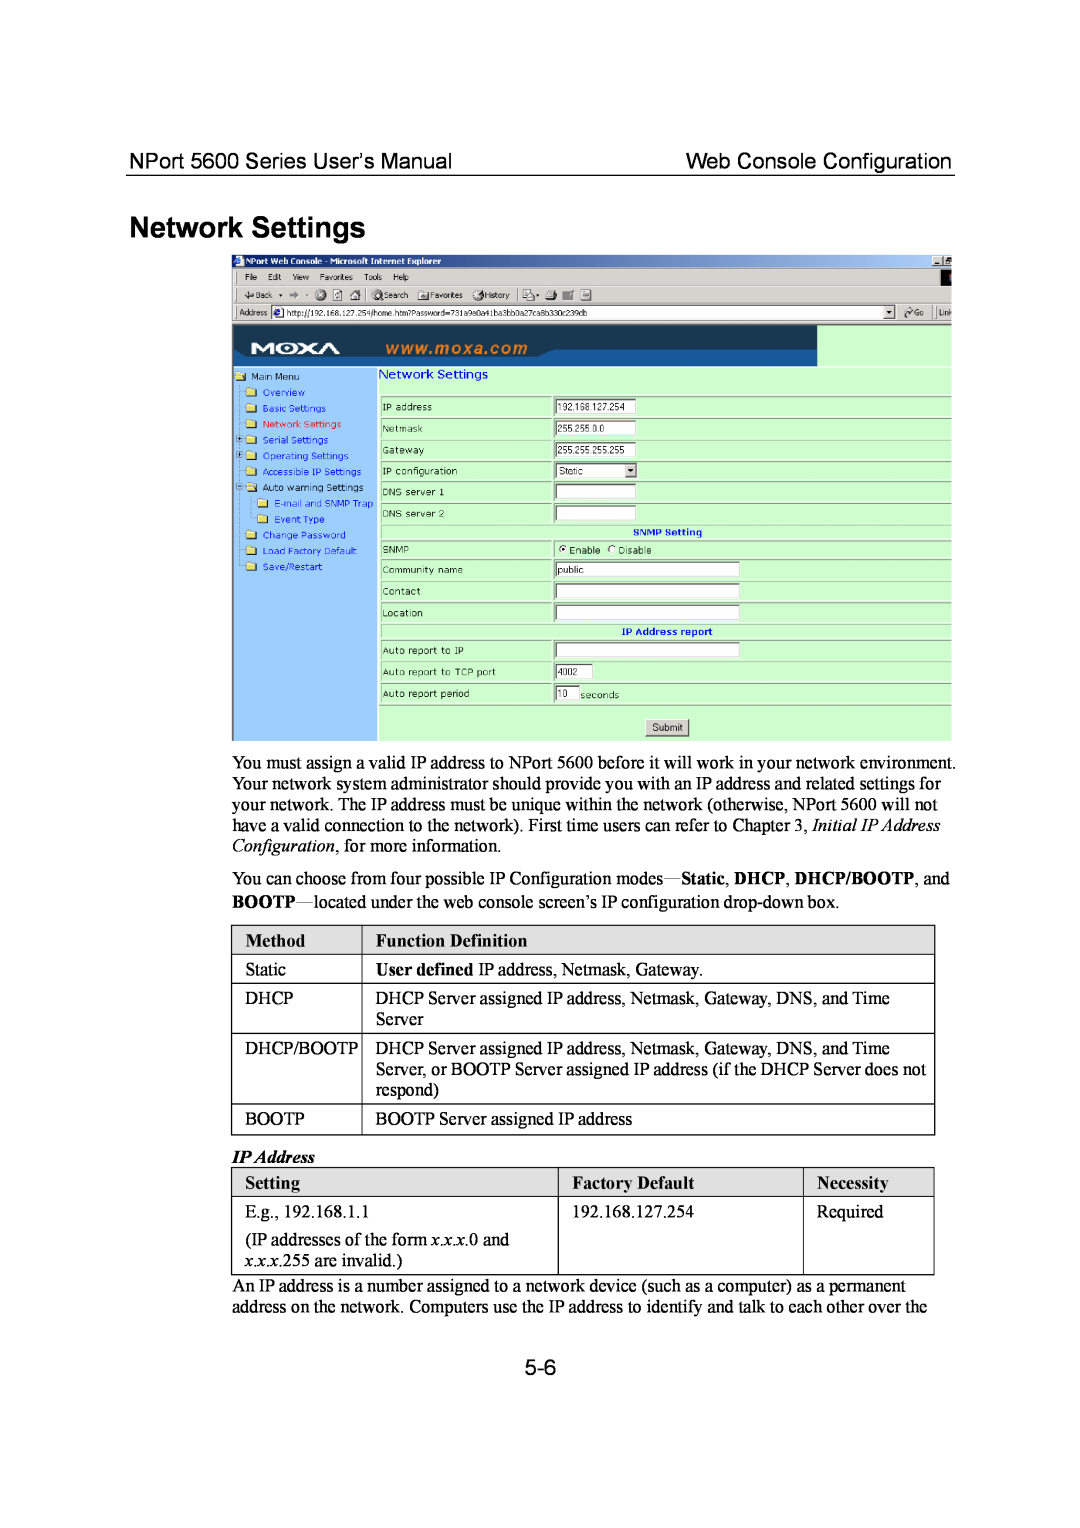 Moxa Technologies user manual Network Settings, NPort 5600 Series User’s Manual, Web Console Configuration, IP Address 